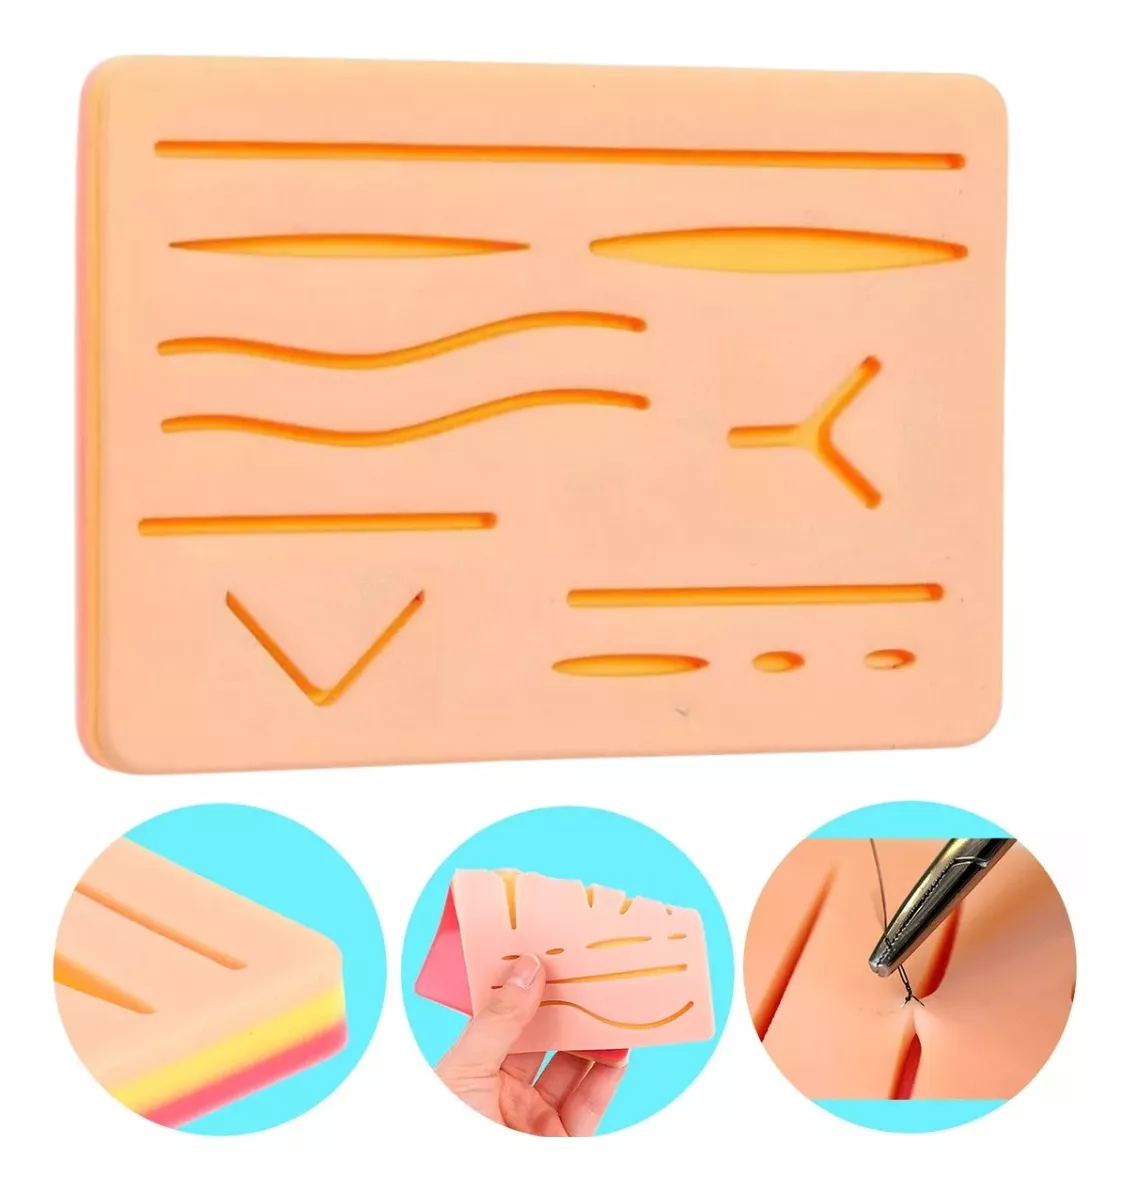 Tercera imagen para búsqueda de pad de sutura